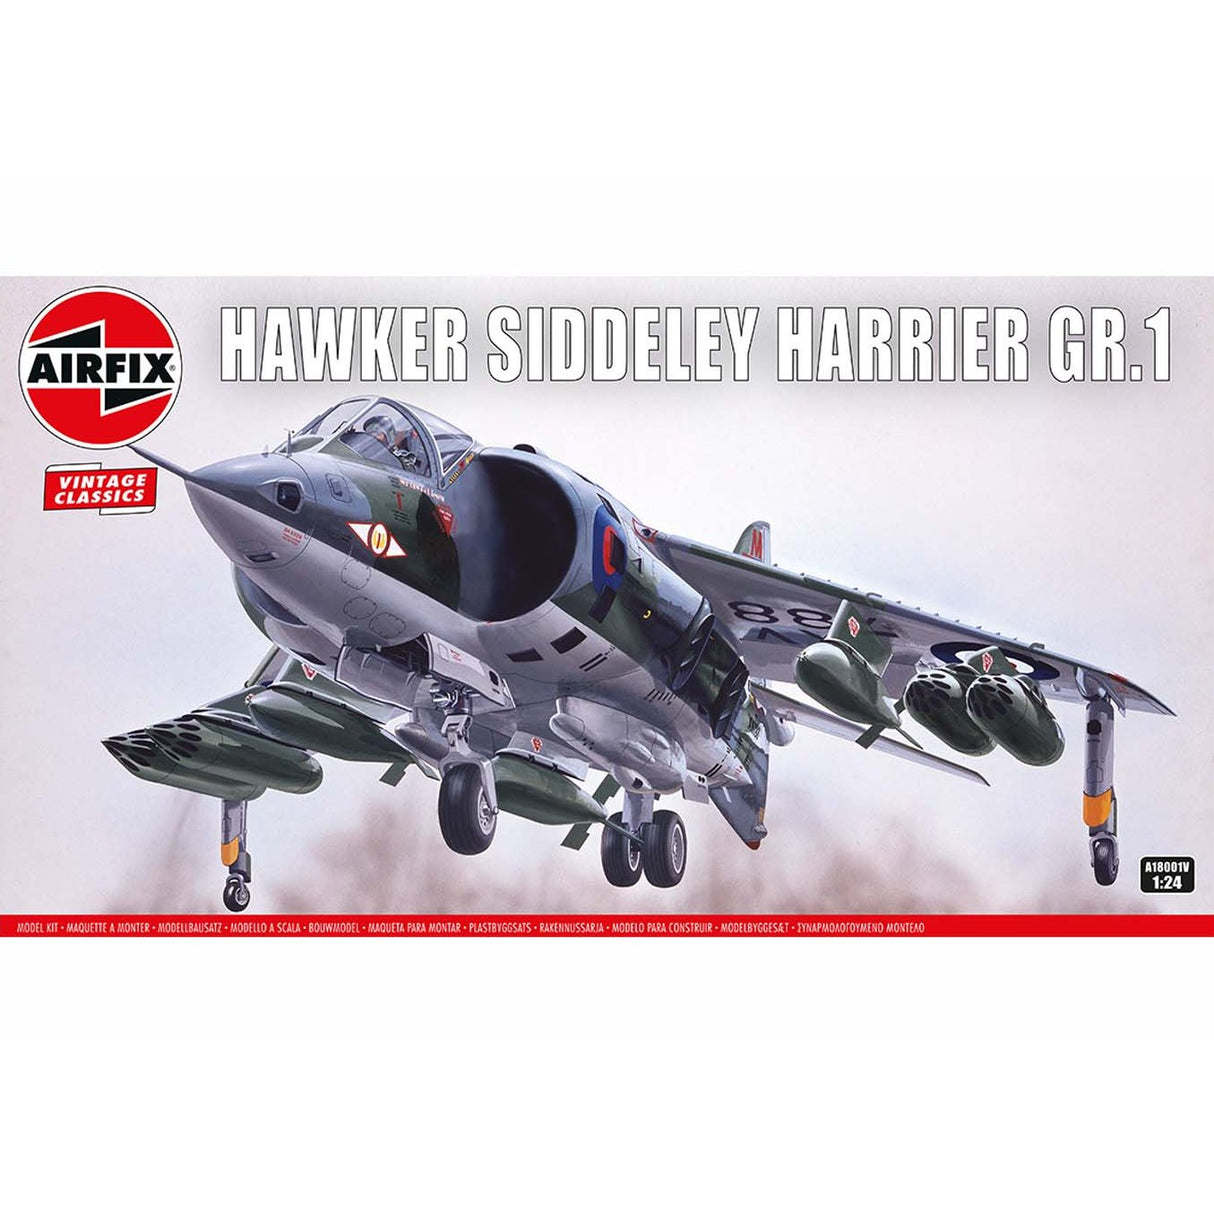 Airfix 1:24 Hawker Siddeley Harrier GR.1